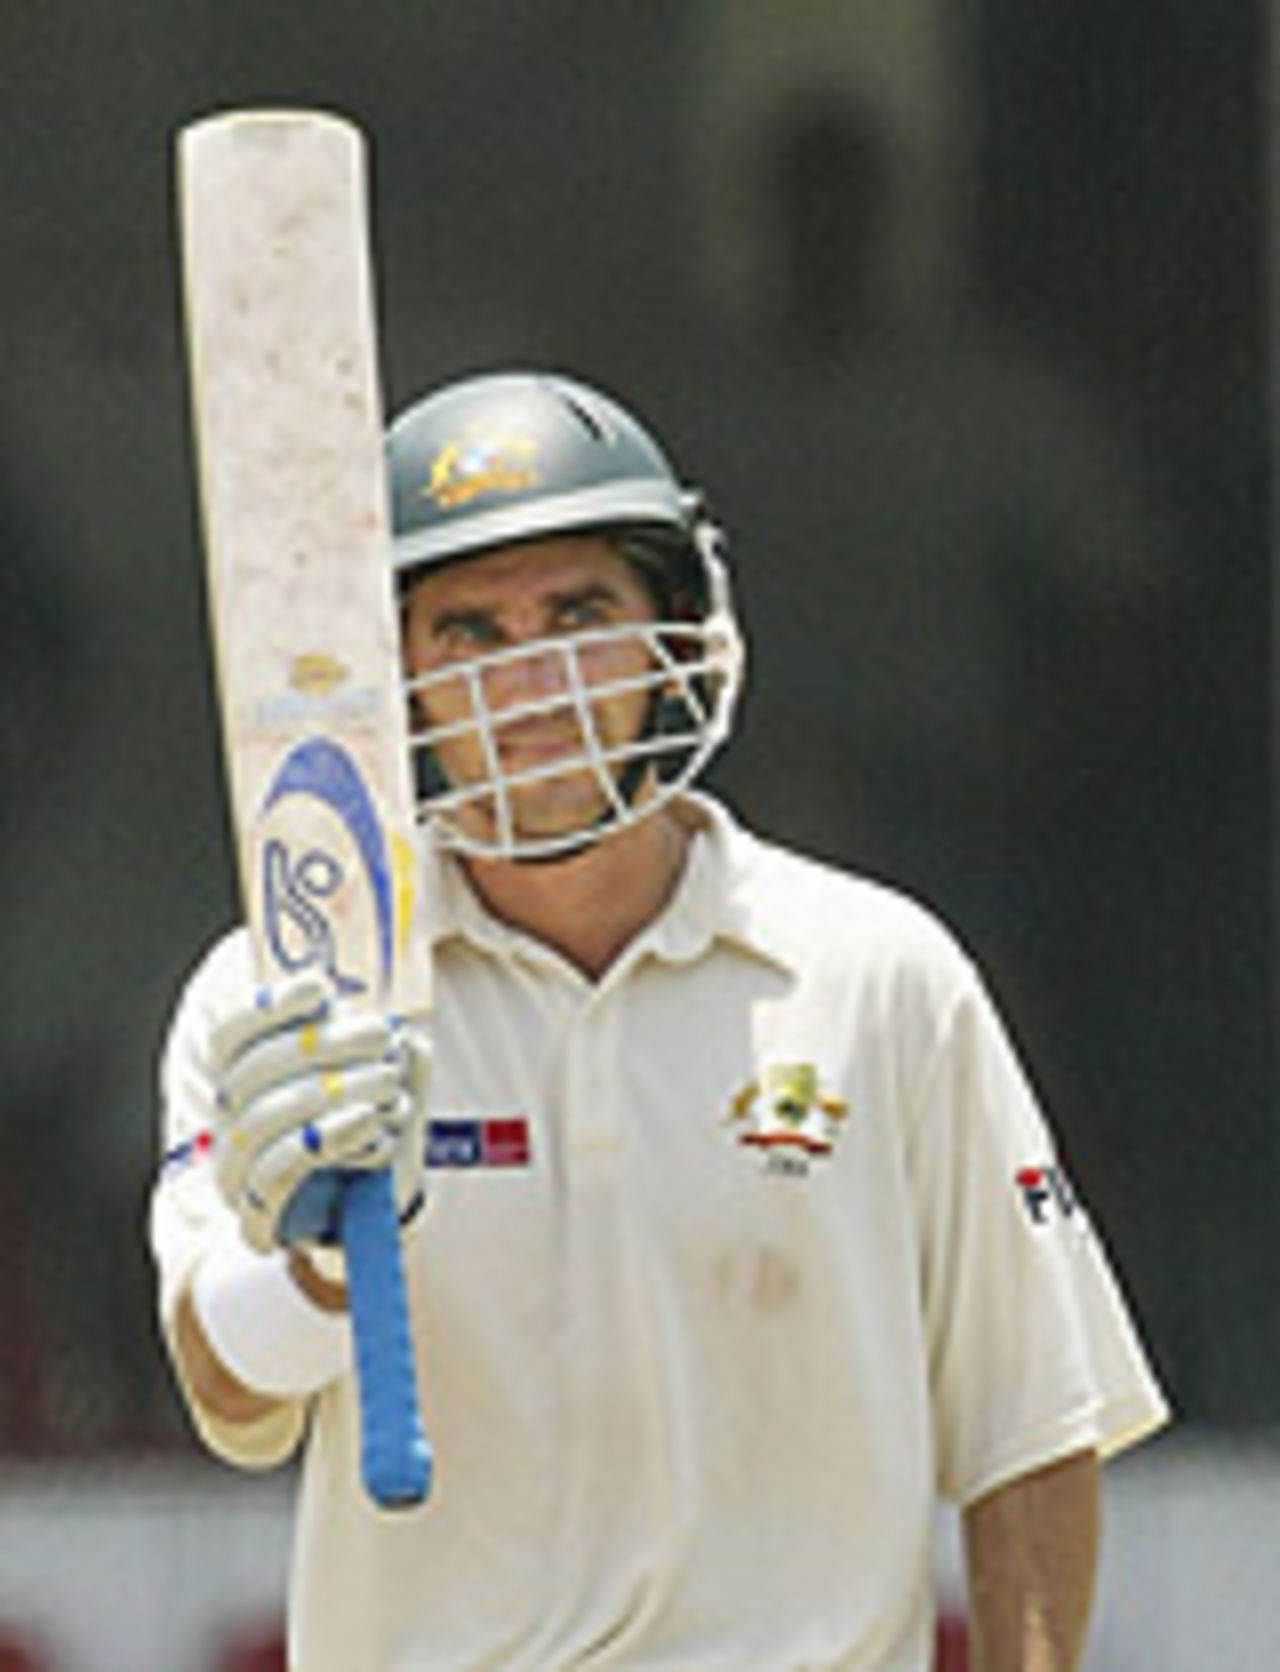 Justin Langer raises his bat after his century, Sri Lanka v Australia, 3rd Test, Colombo, 4th day, March 27, 2004